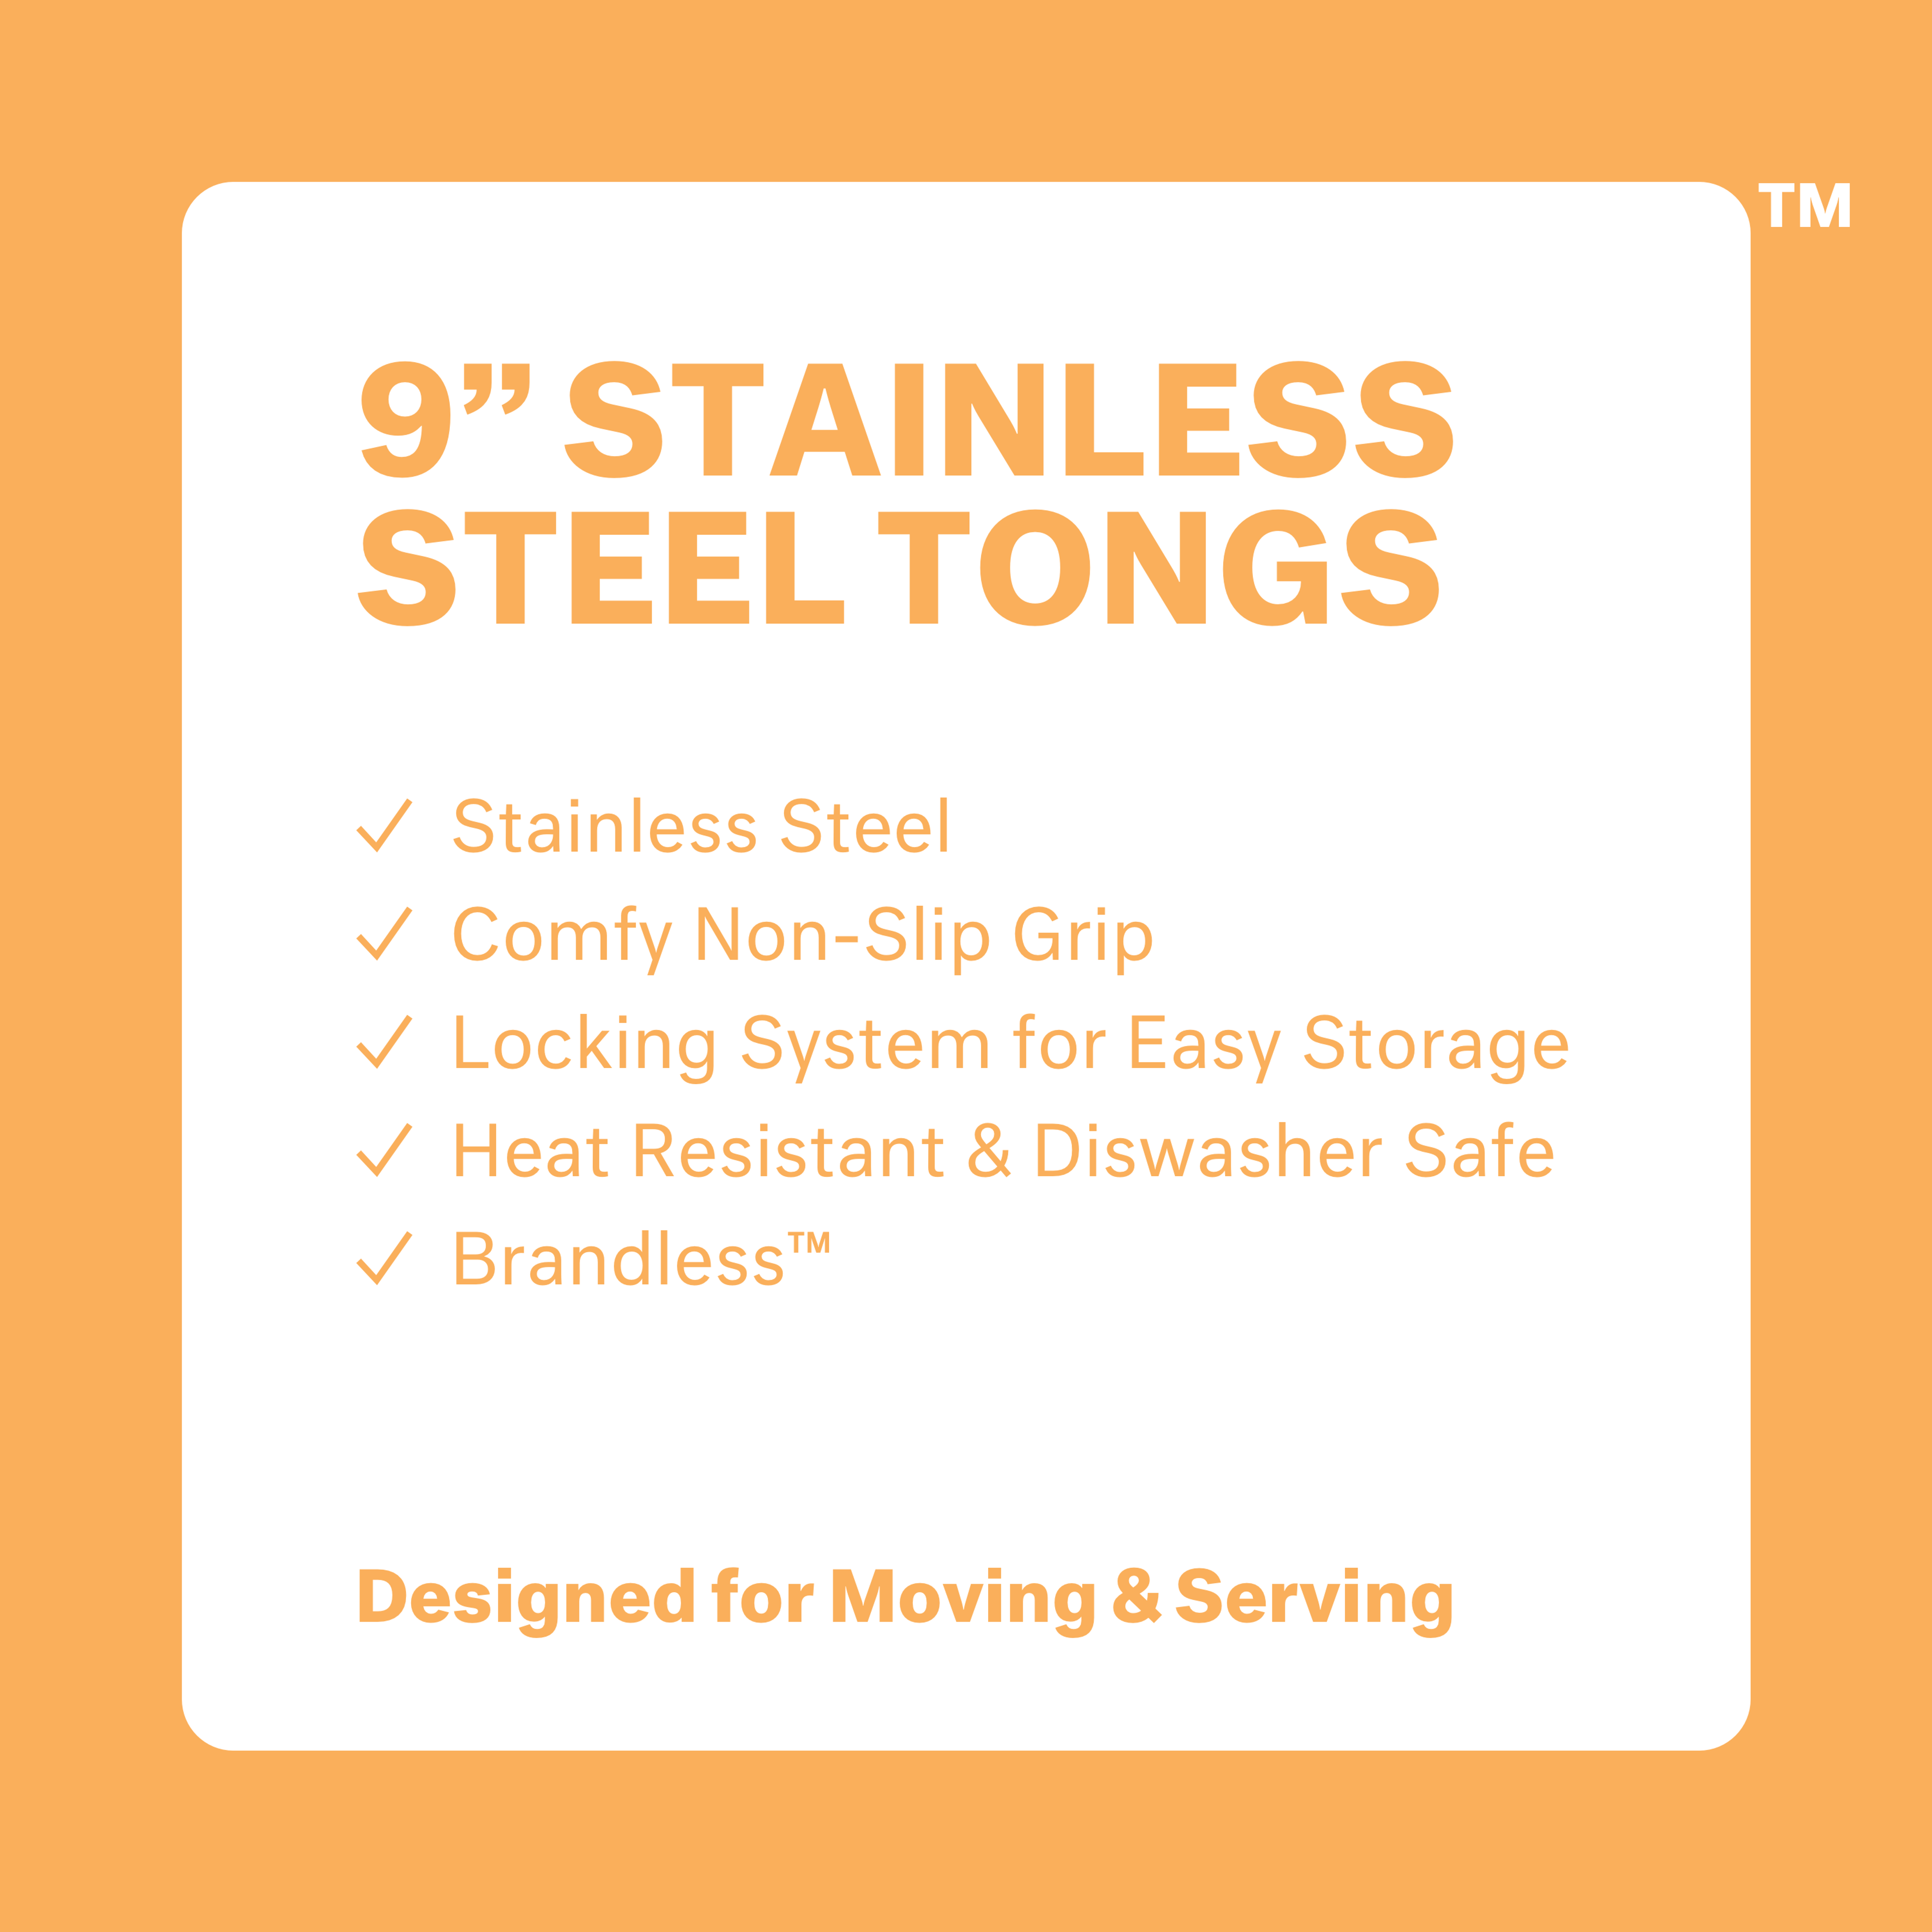 9" Stainless Steel Tongs